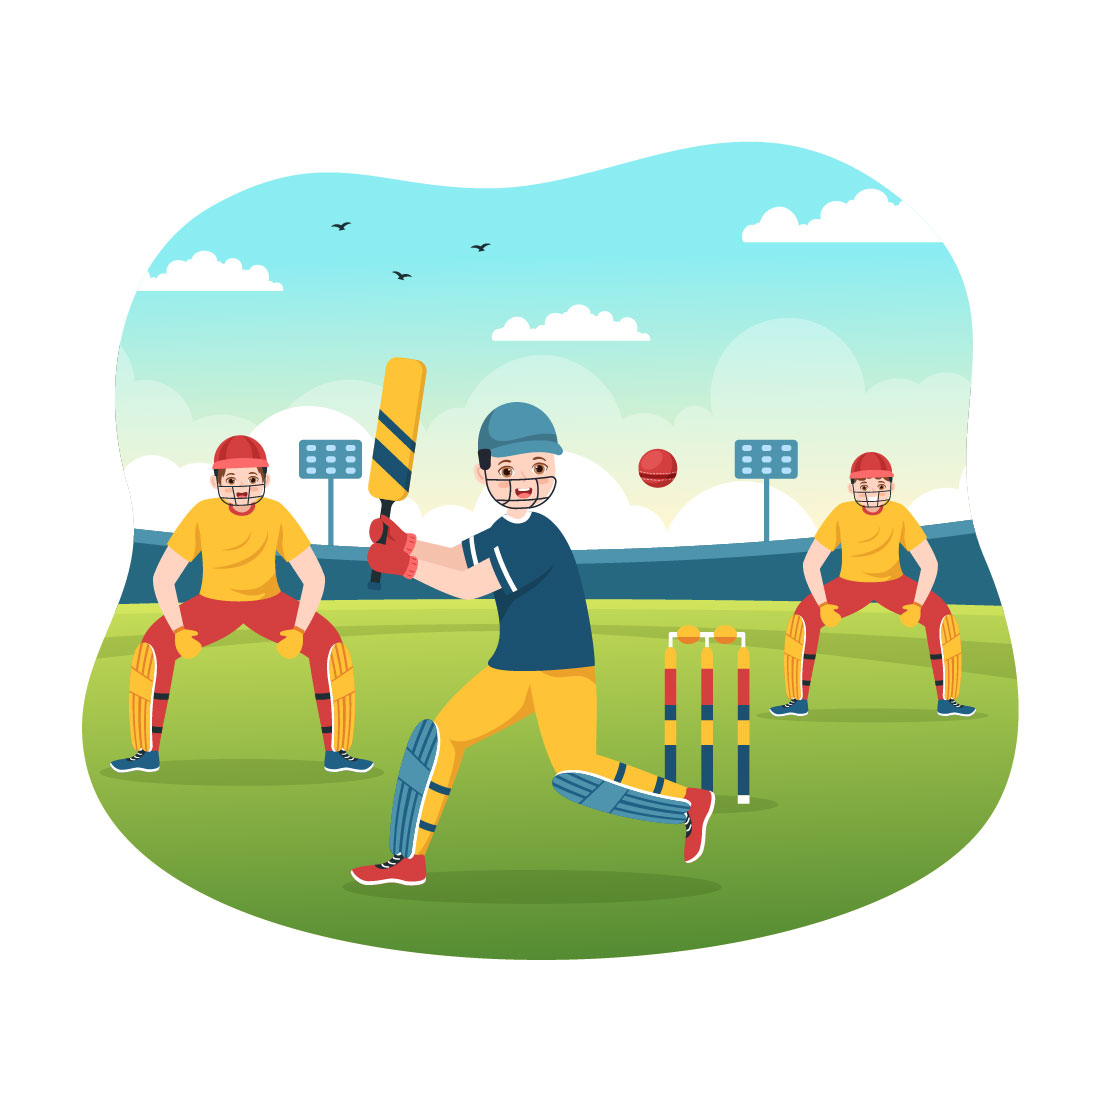 Sport Cricket Graphics Design cover image.